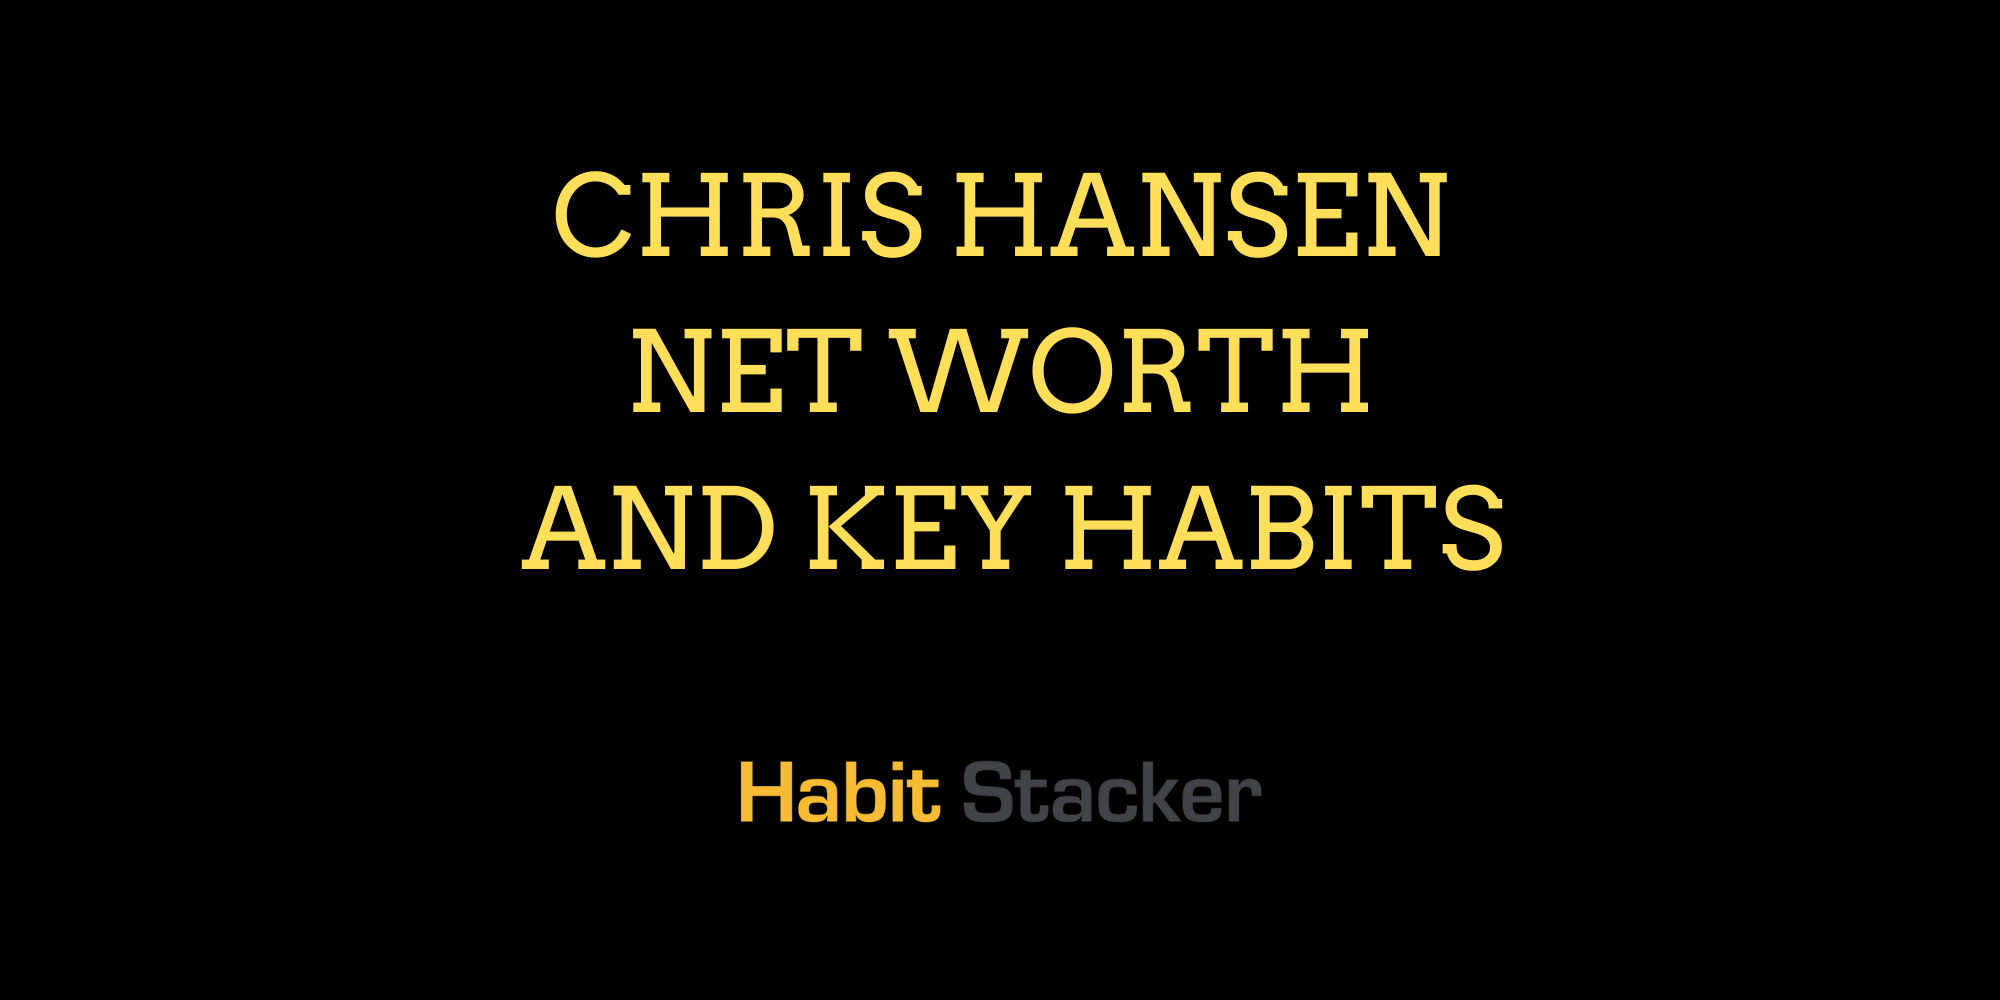 Chris Hansen Net Worth and Key Habits